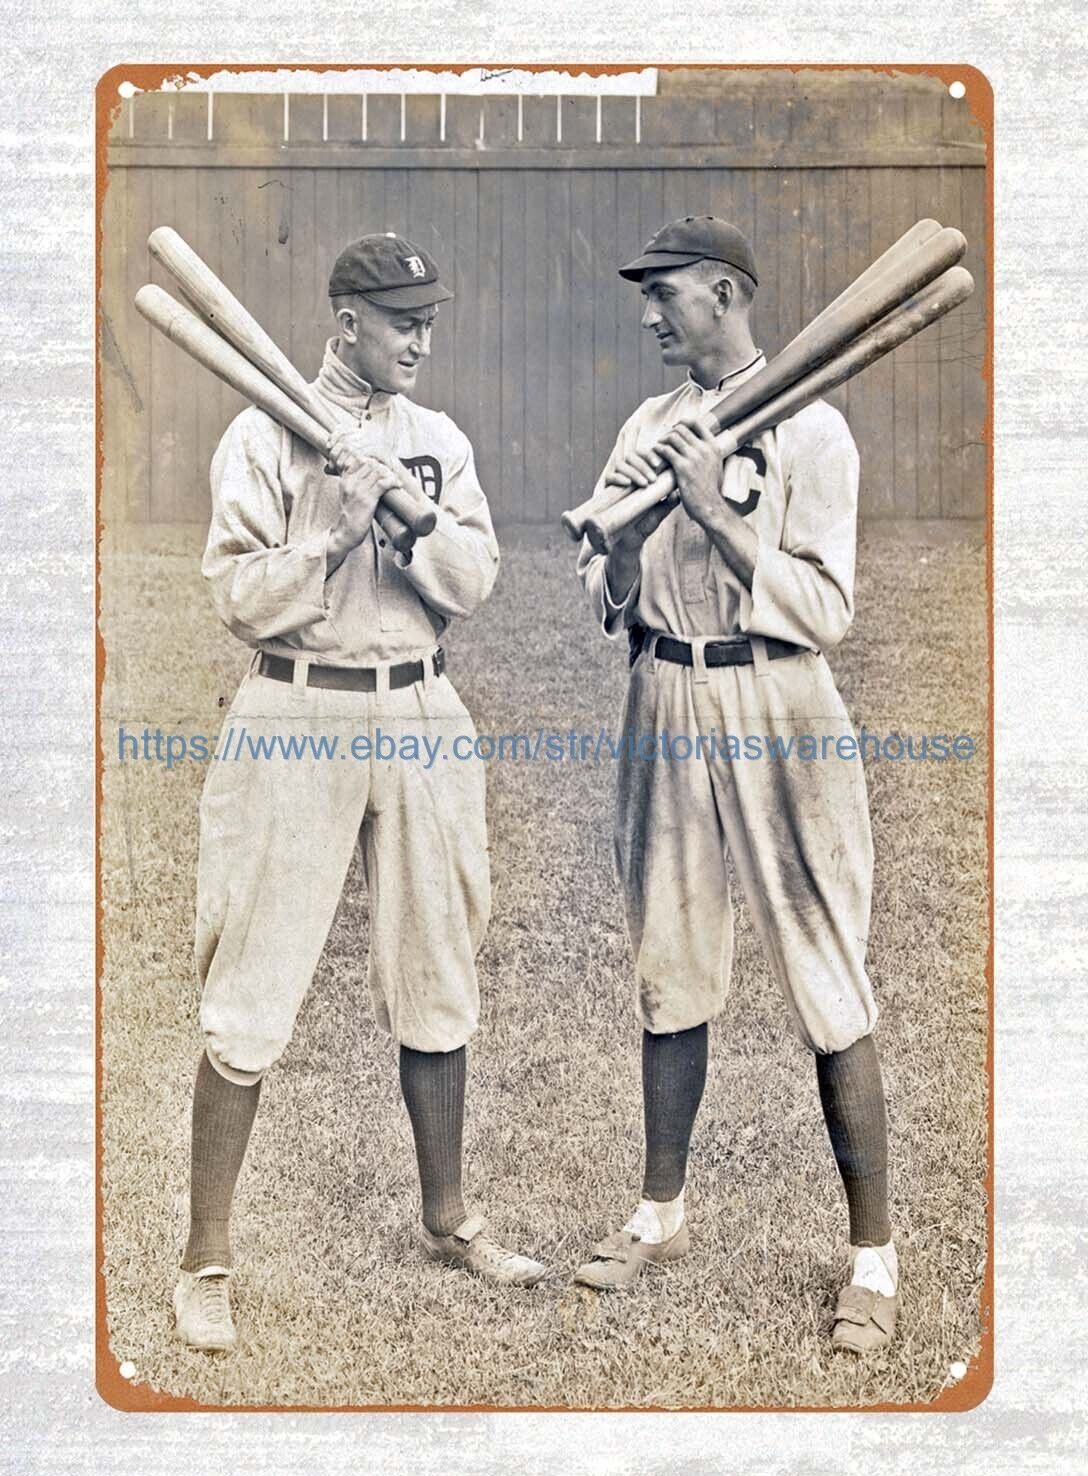 Ty Cobb & Shoeless Joe Jackson in Cleveland baseball player 1913 tin sign